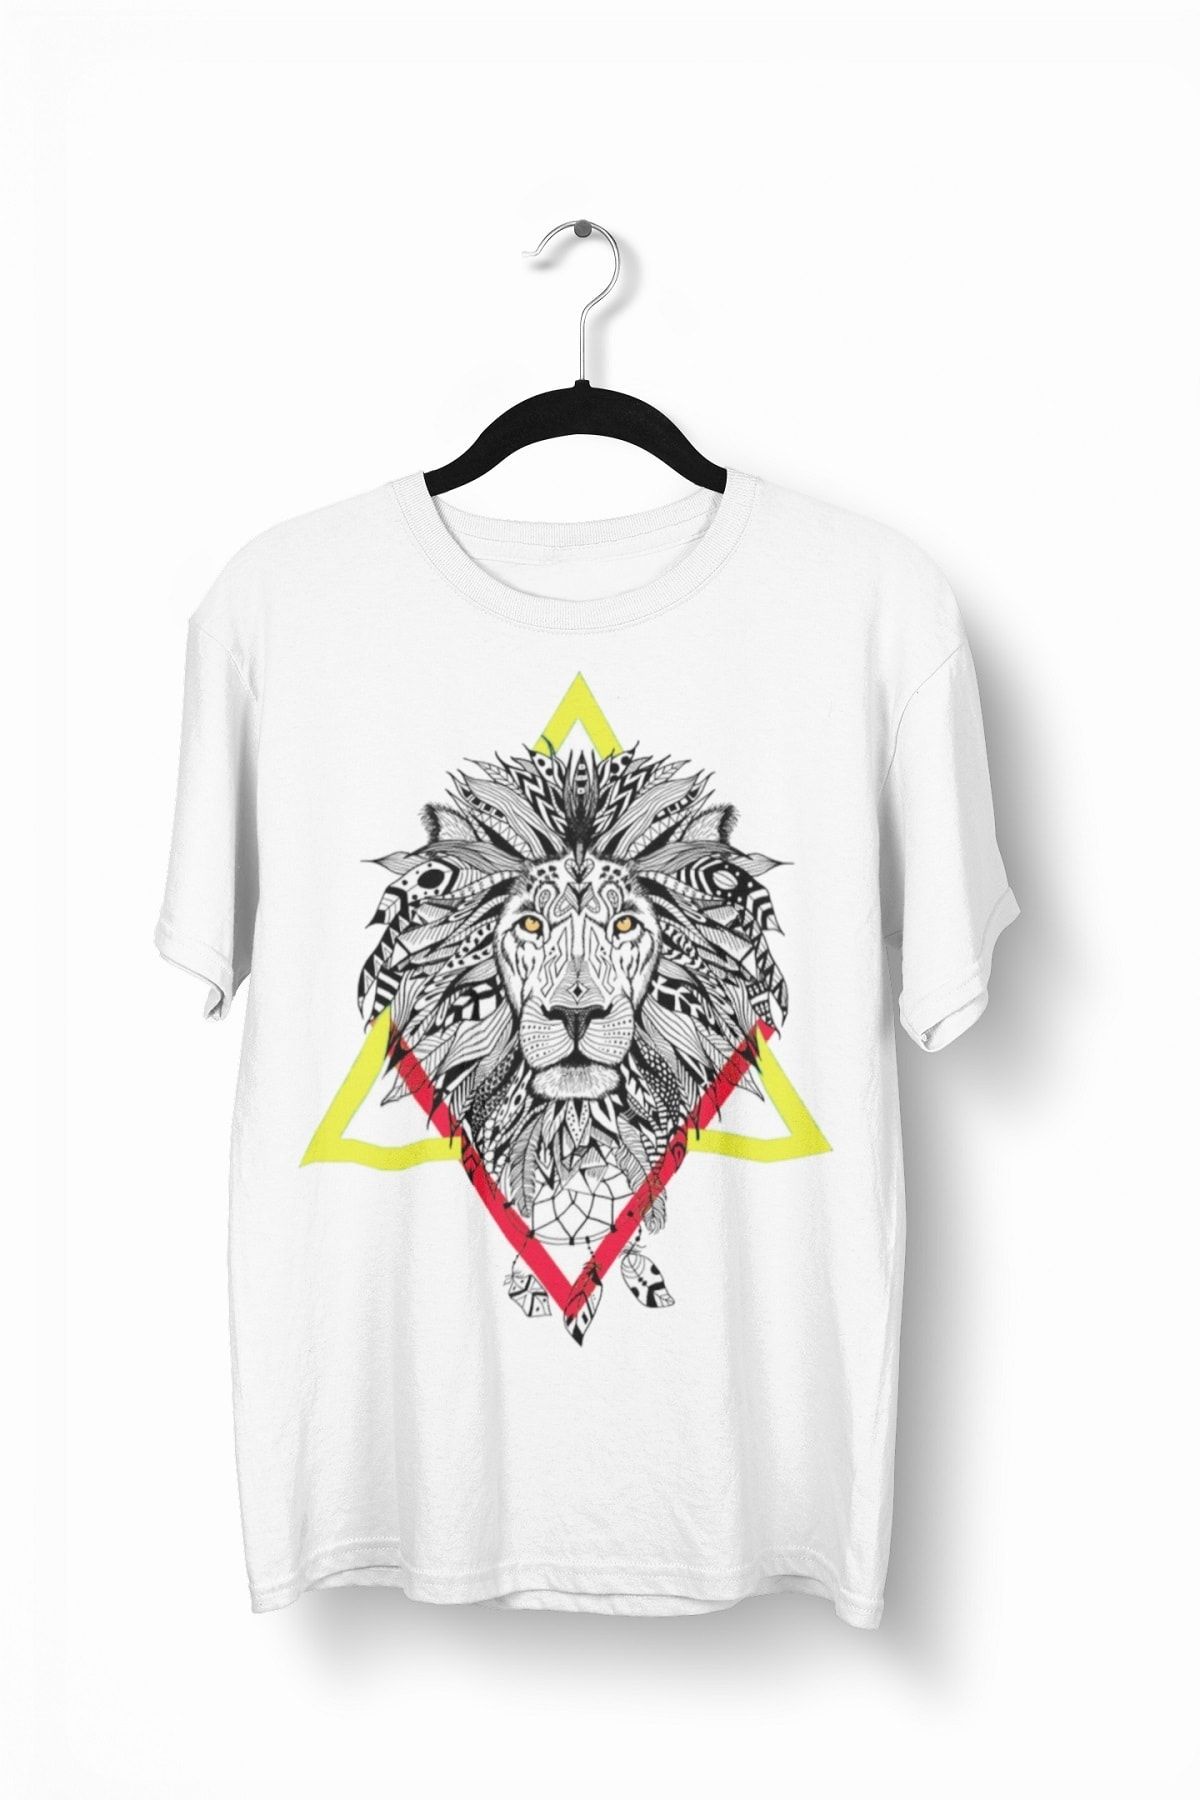 Tshigo Triangle Lion Baskılı Erkek T-Shirt - 2019TS198